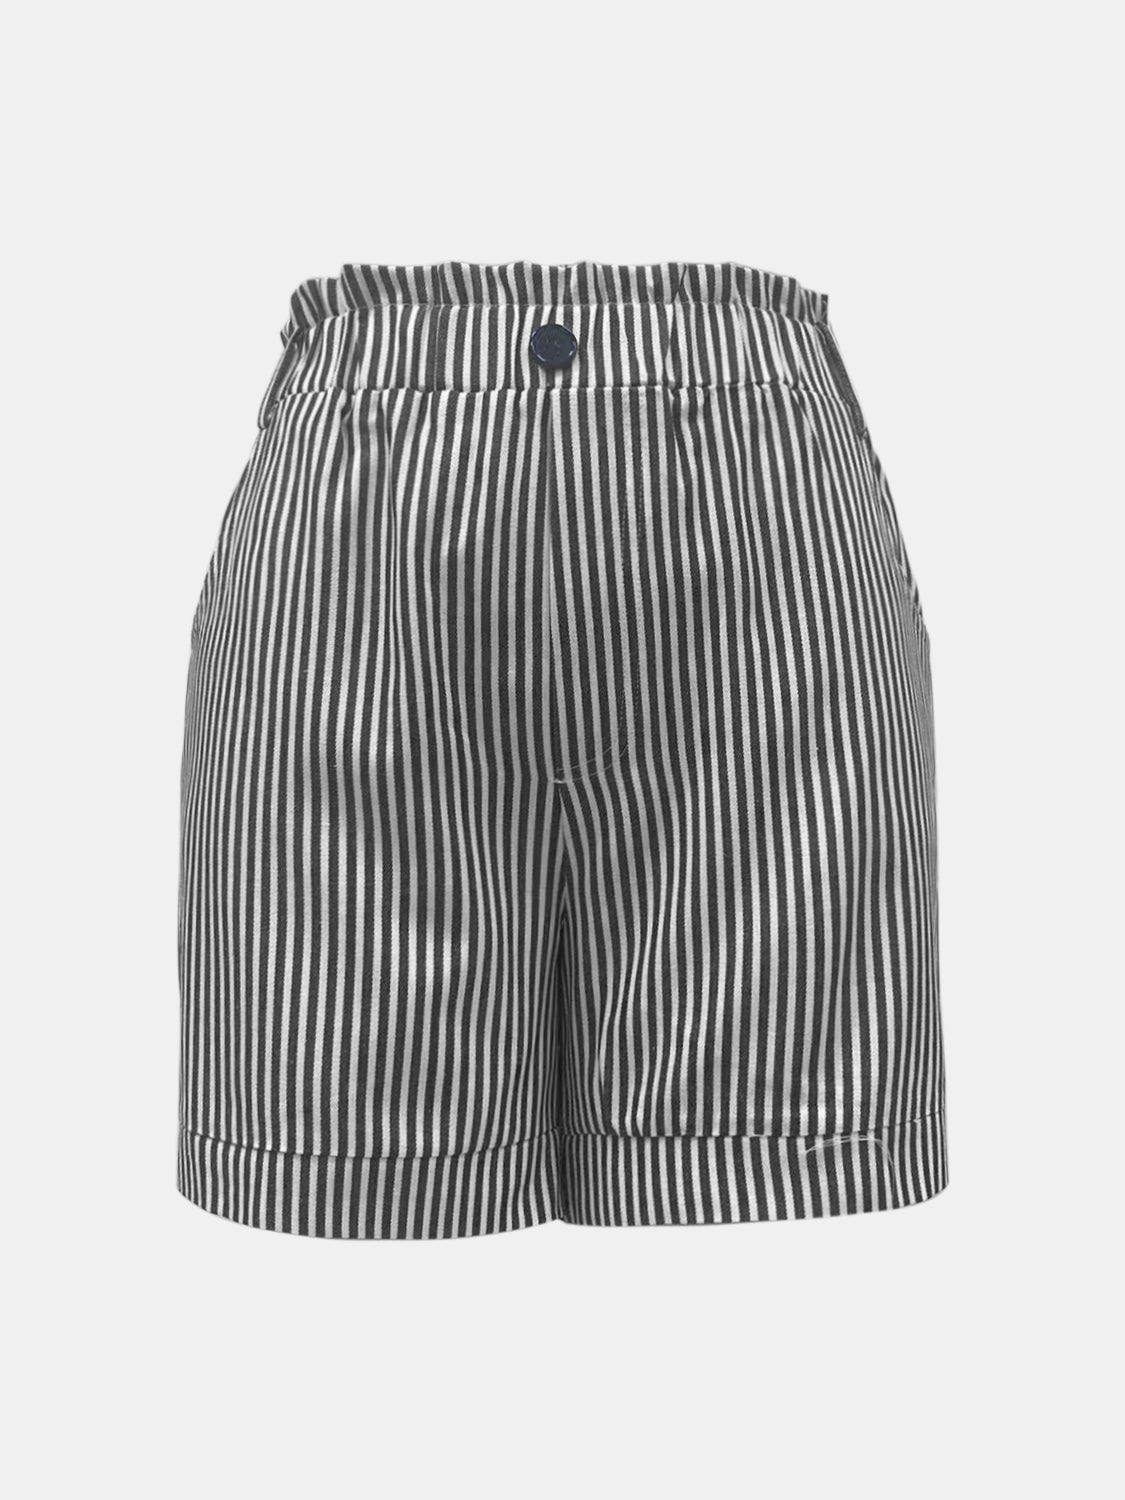 Full Size Striped Shorts with Pockets - Tigbuls Variety Fashion